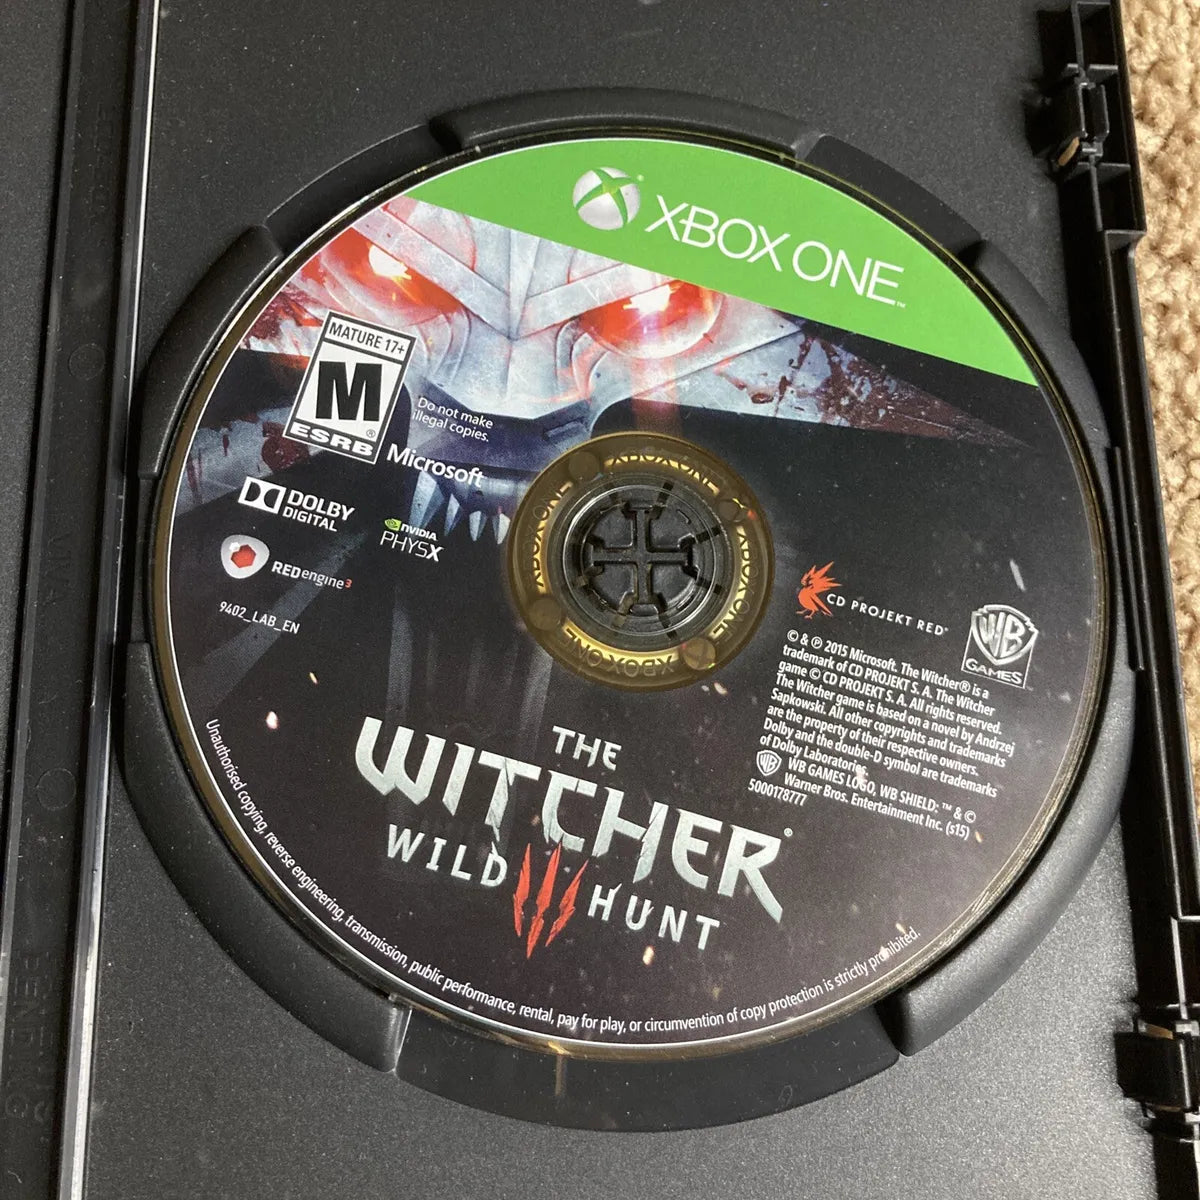 Xbox One - The Witcher III: Wild Hunt - Used